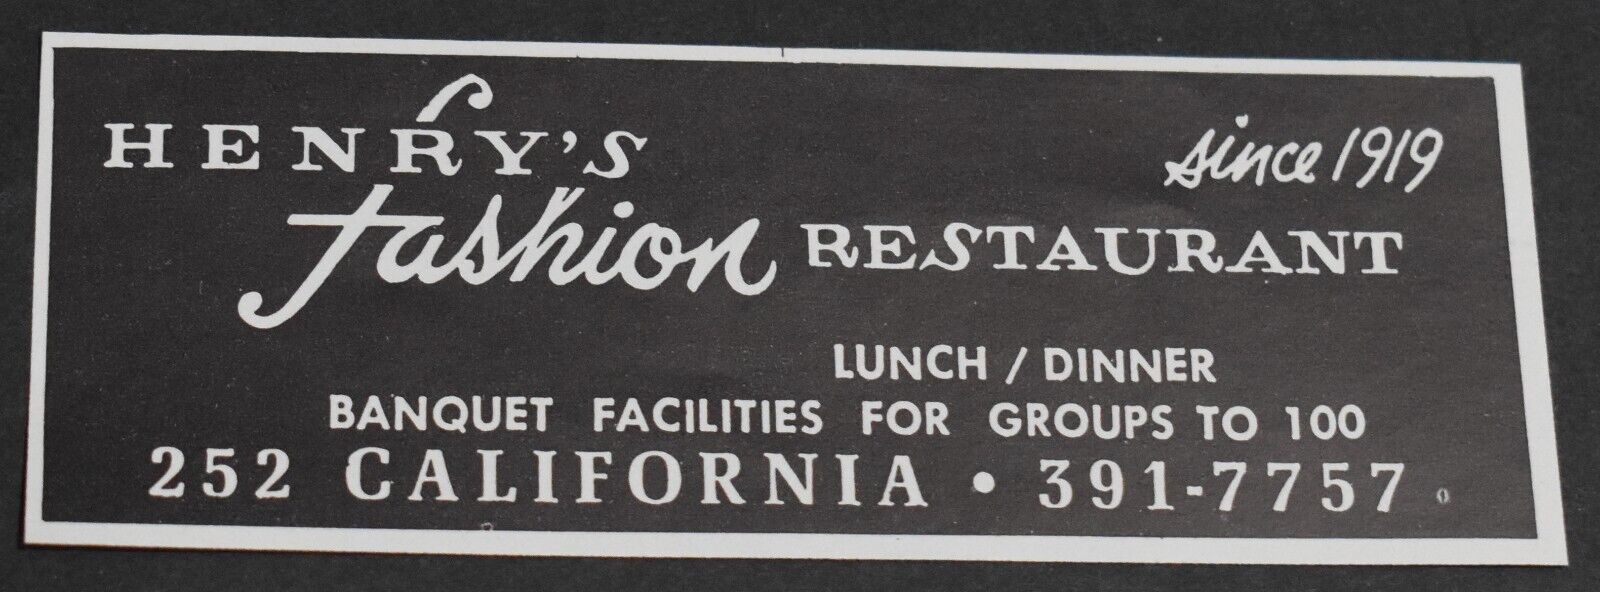 1969 Print Ad San Francisco Henry\'s Fashion Restaurant 252 California Lunch art